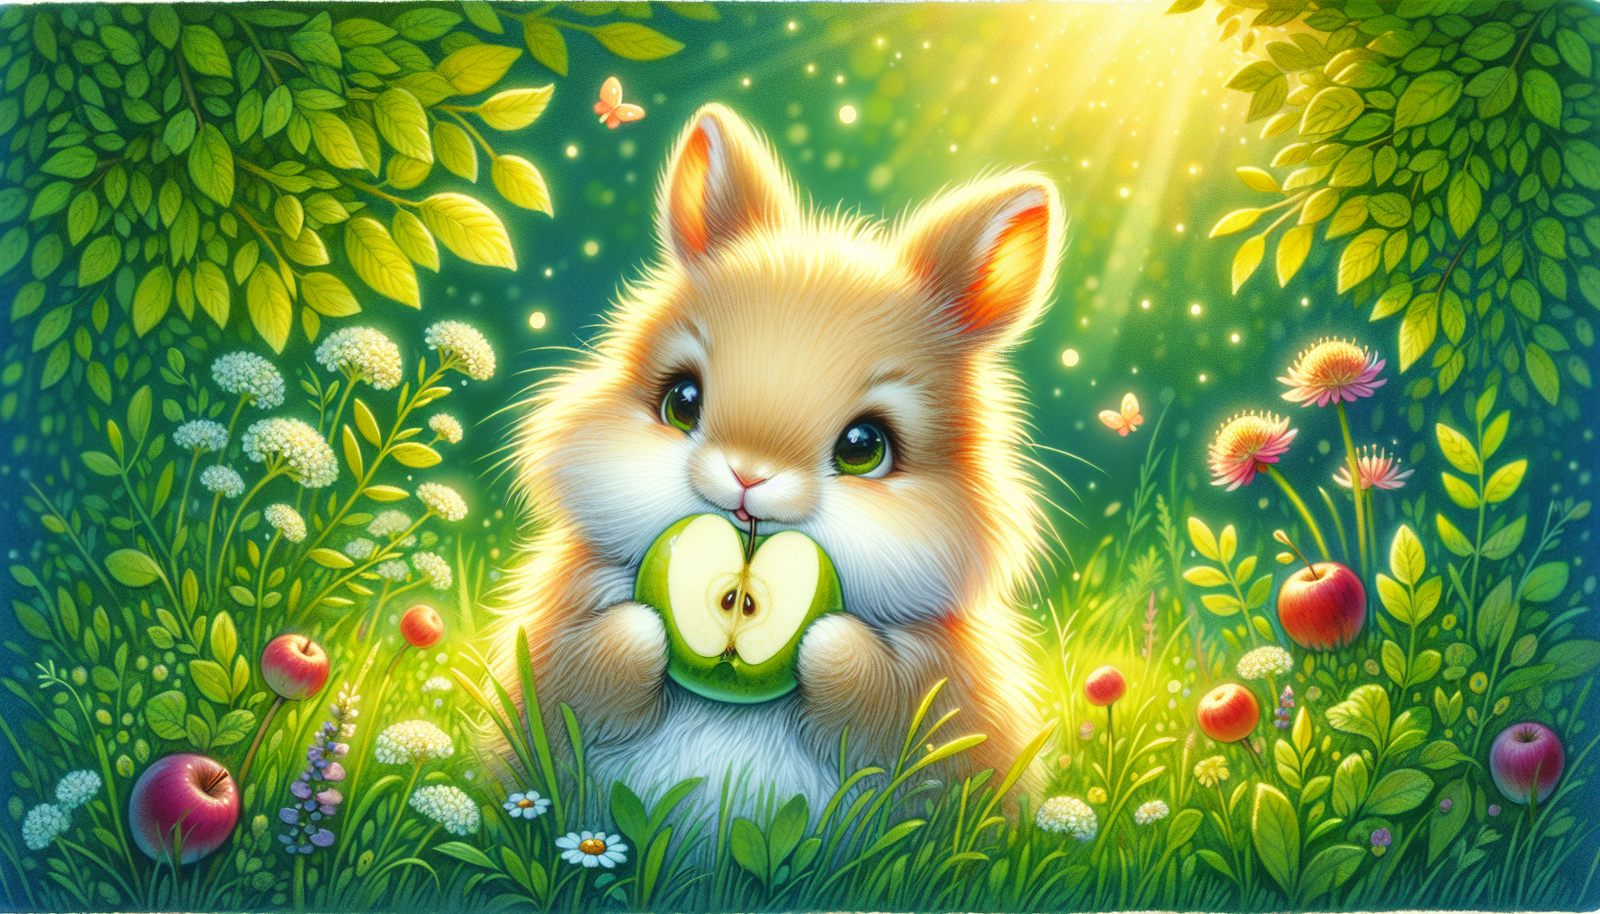 Illustration of a rabbit eating an apple slice